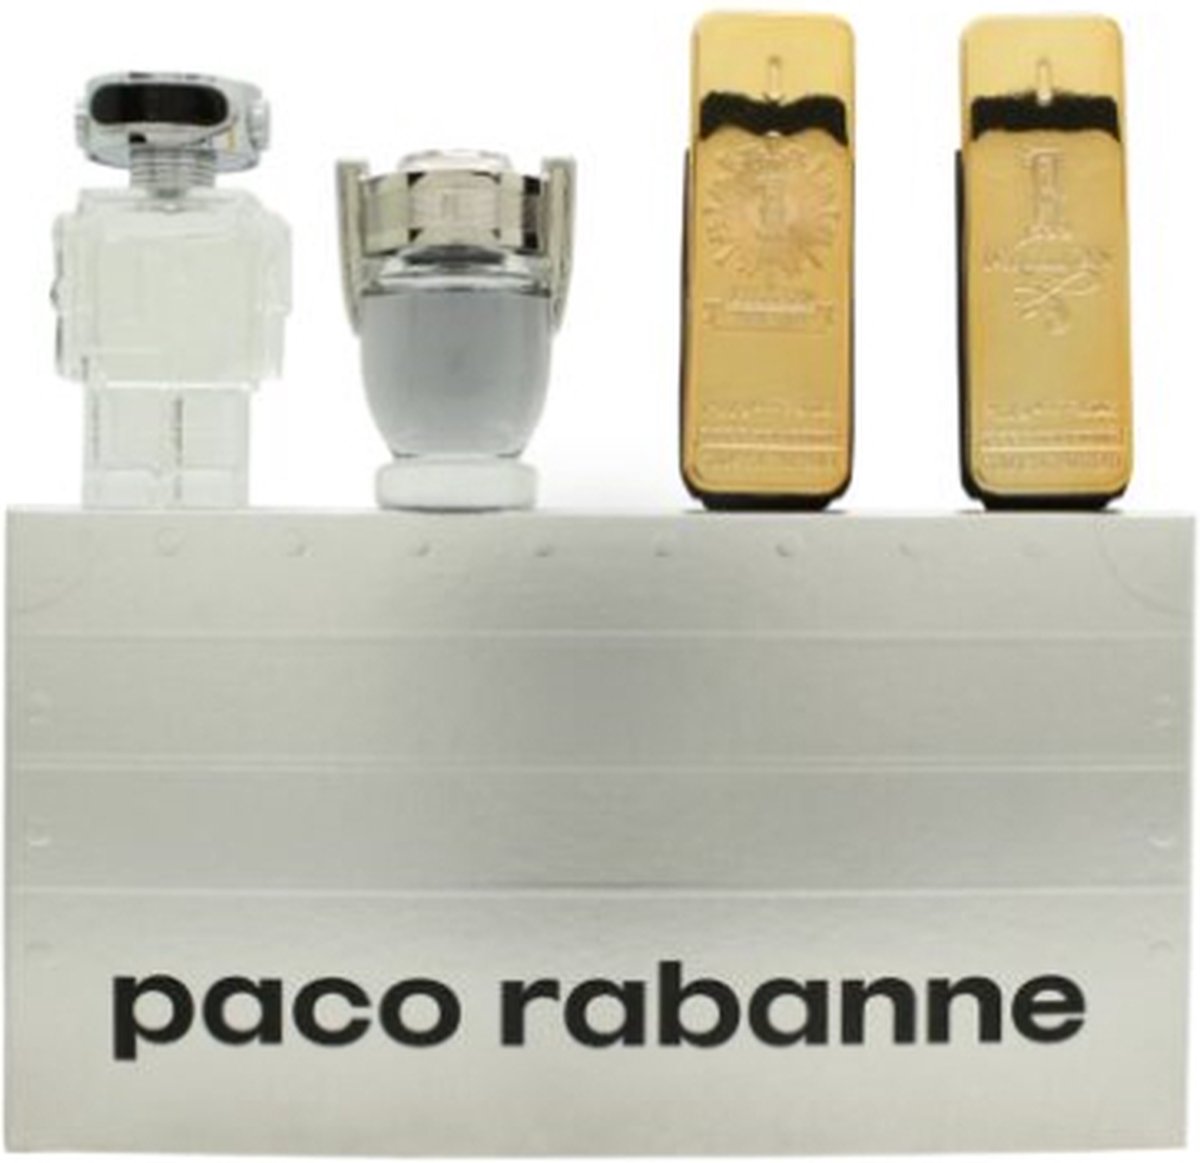 Paco Rabanne Travel Retail Exclusive 1 Million Set